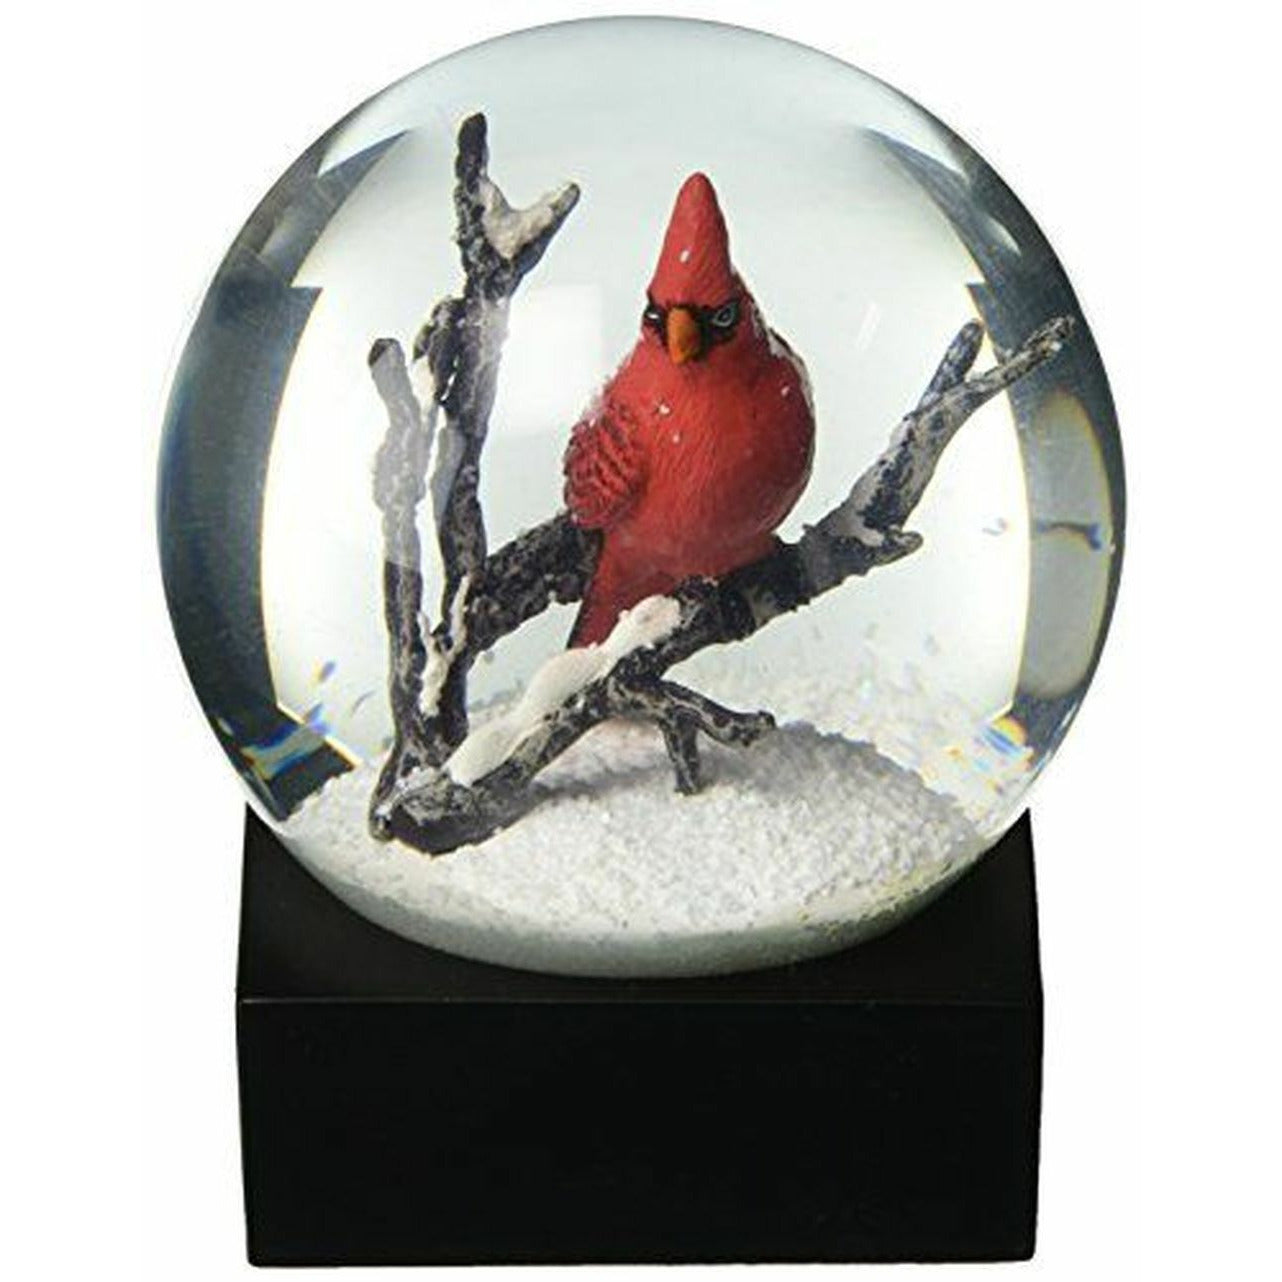 Cool Snow Globes Cardinal Singing Snekugle